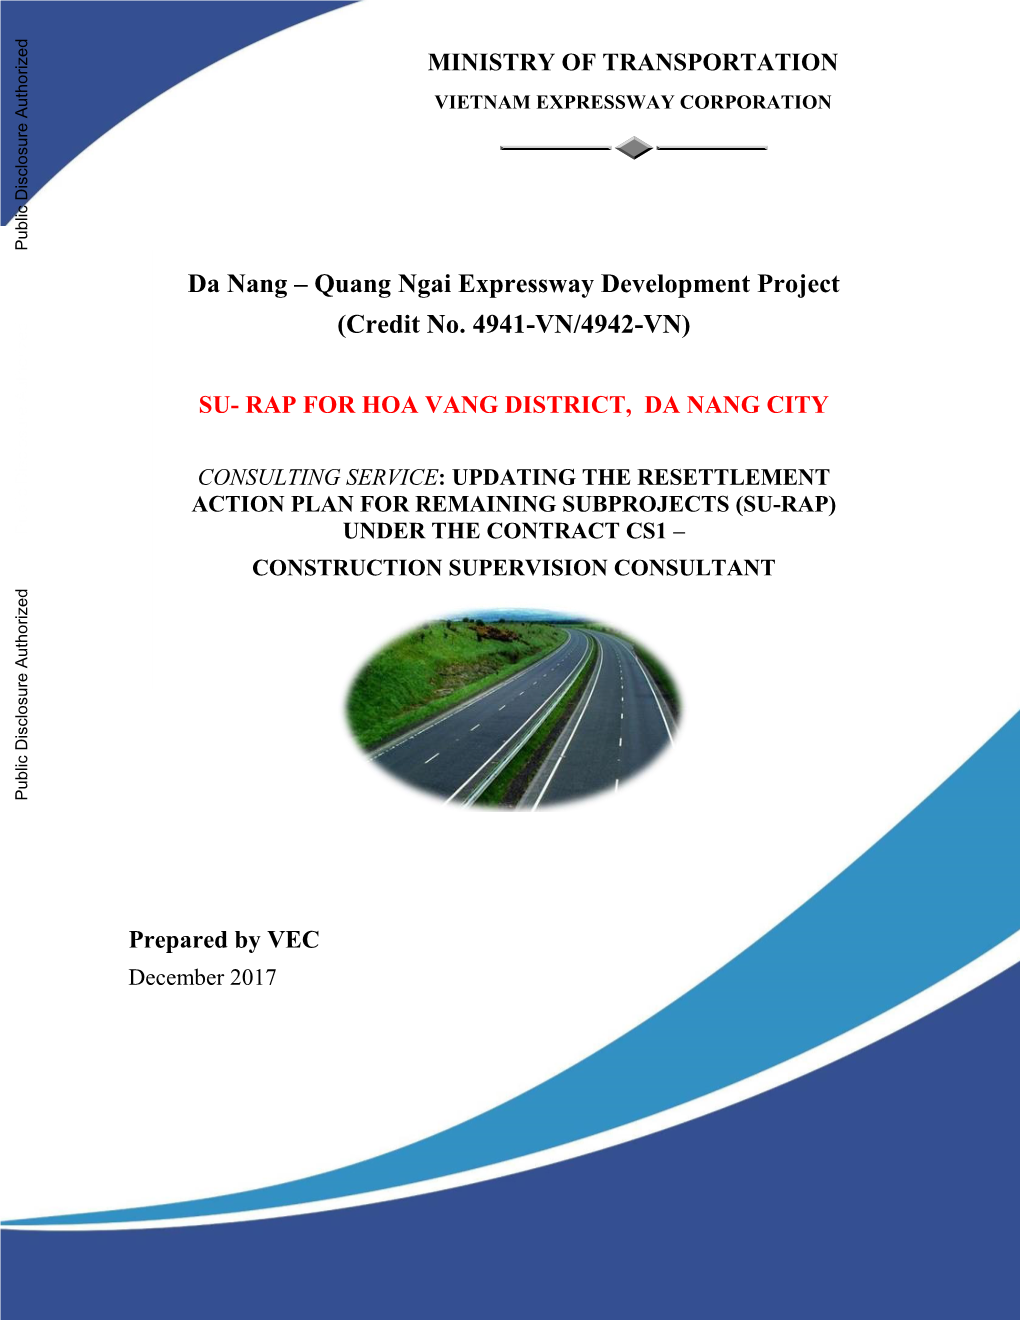 Da Nang – Quang Ngai Expressway Development Project